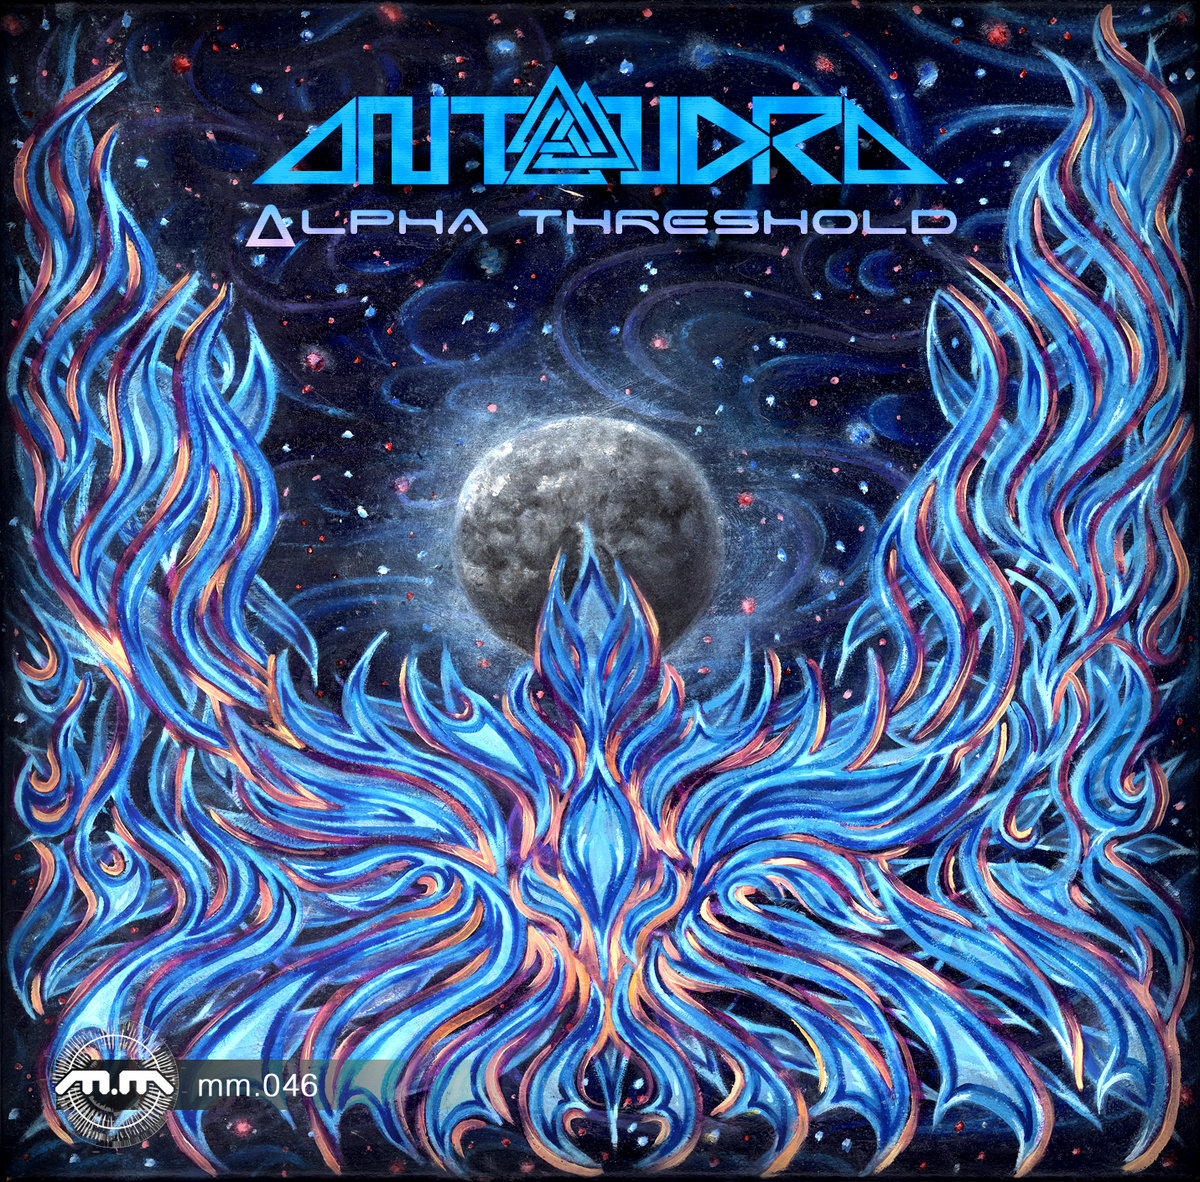 Antandra - Melting Pot of Dreams @ 'Alpha Threshold' album (ambient, downtempo)